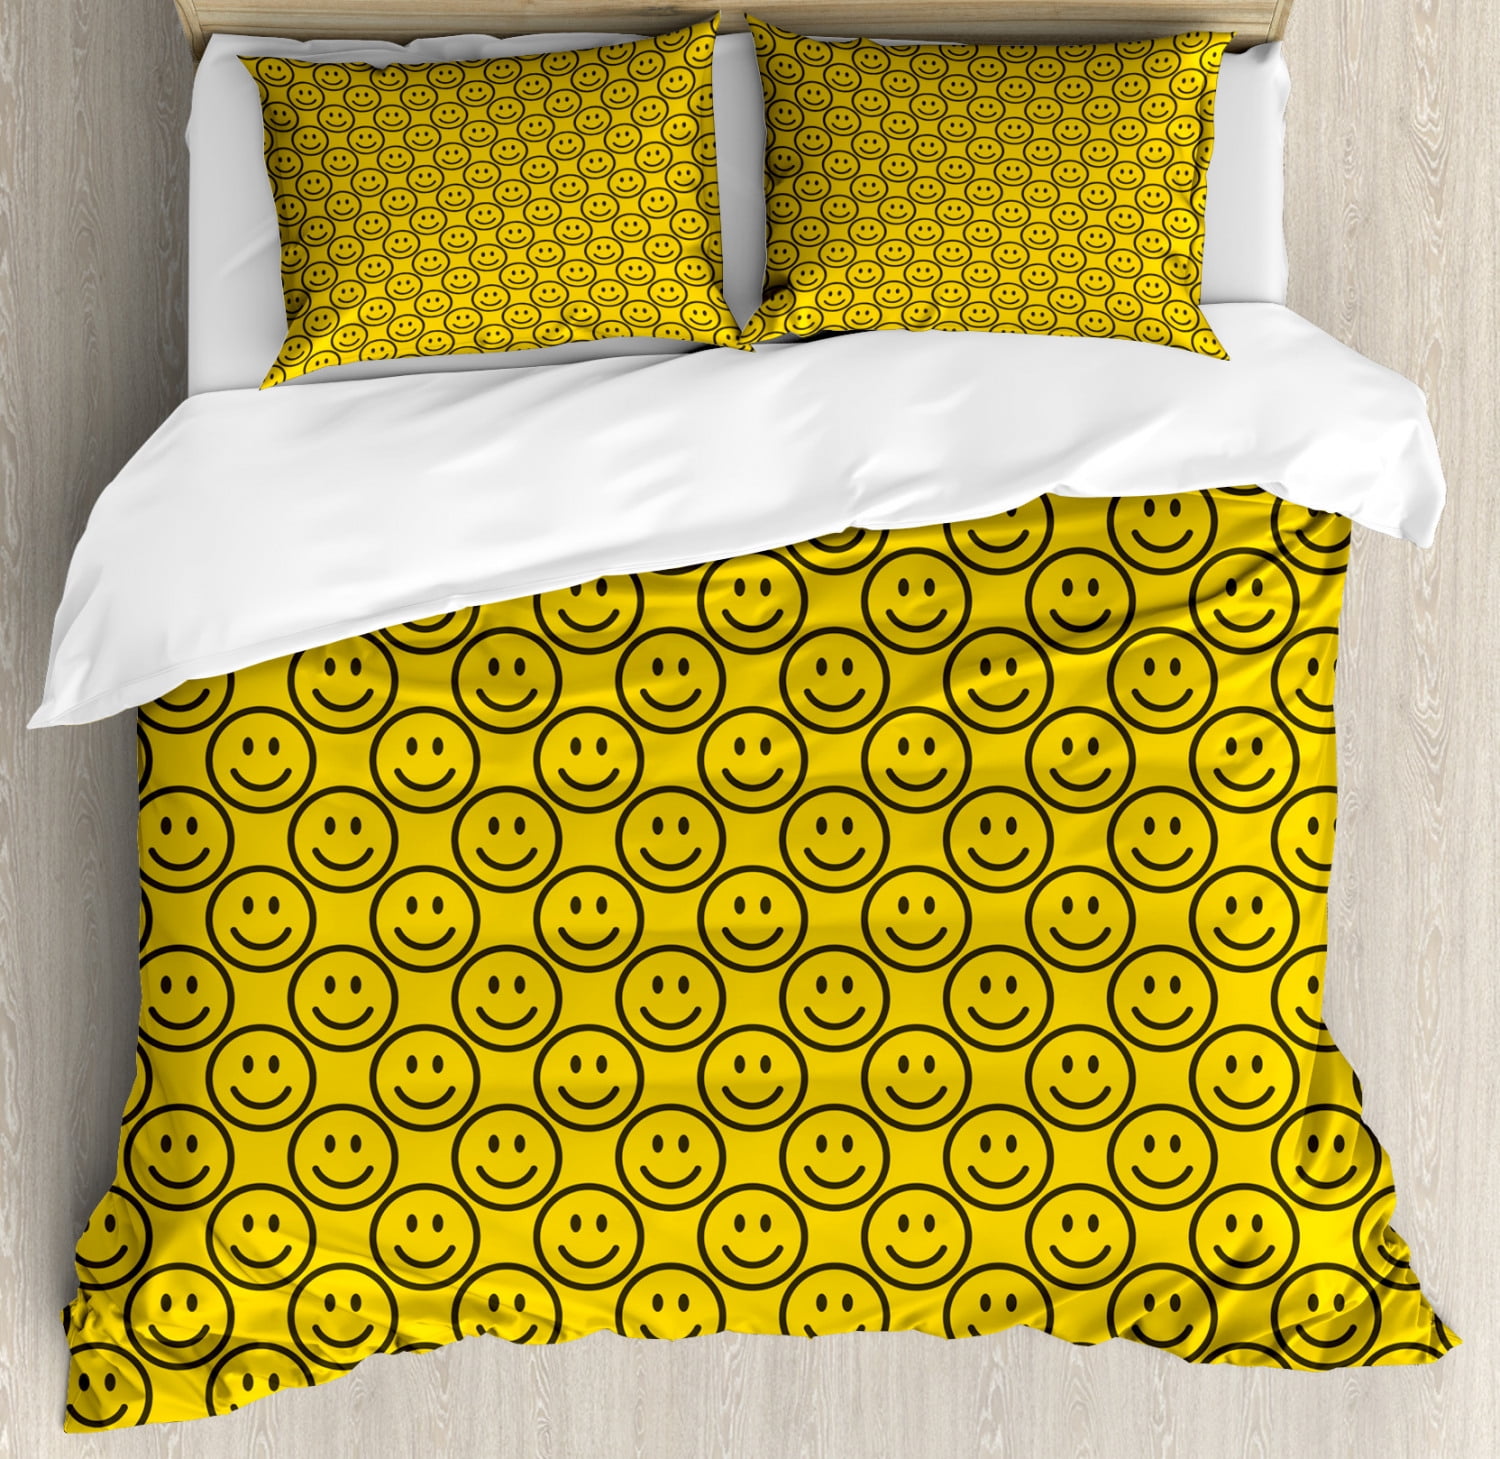 Emoji Duvet Covers Icon Smiley Face Black White Reversible Fun Bedding Set Cover 